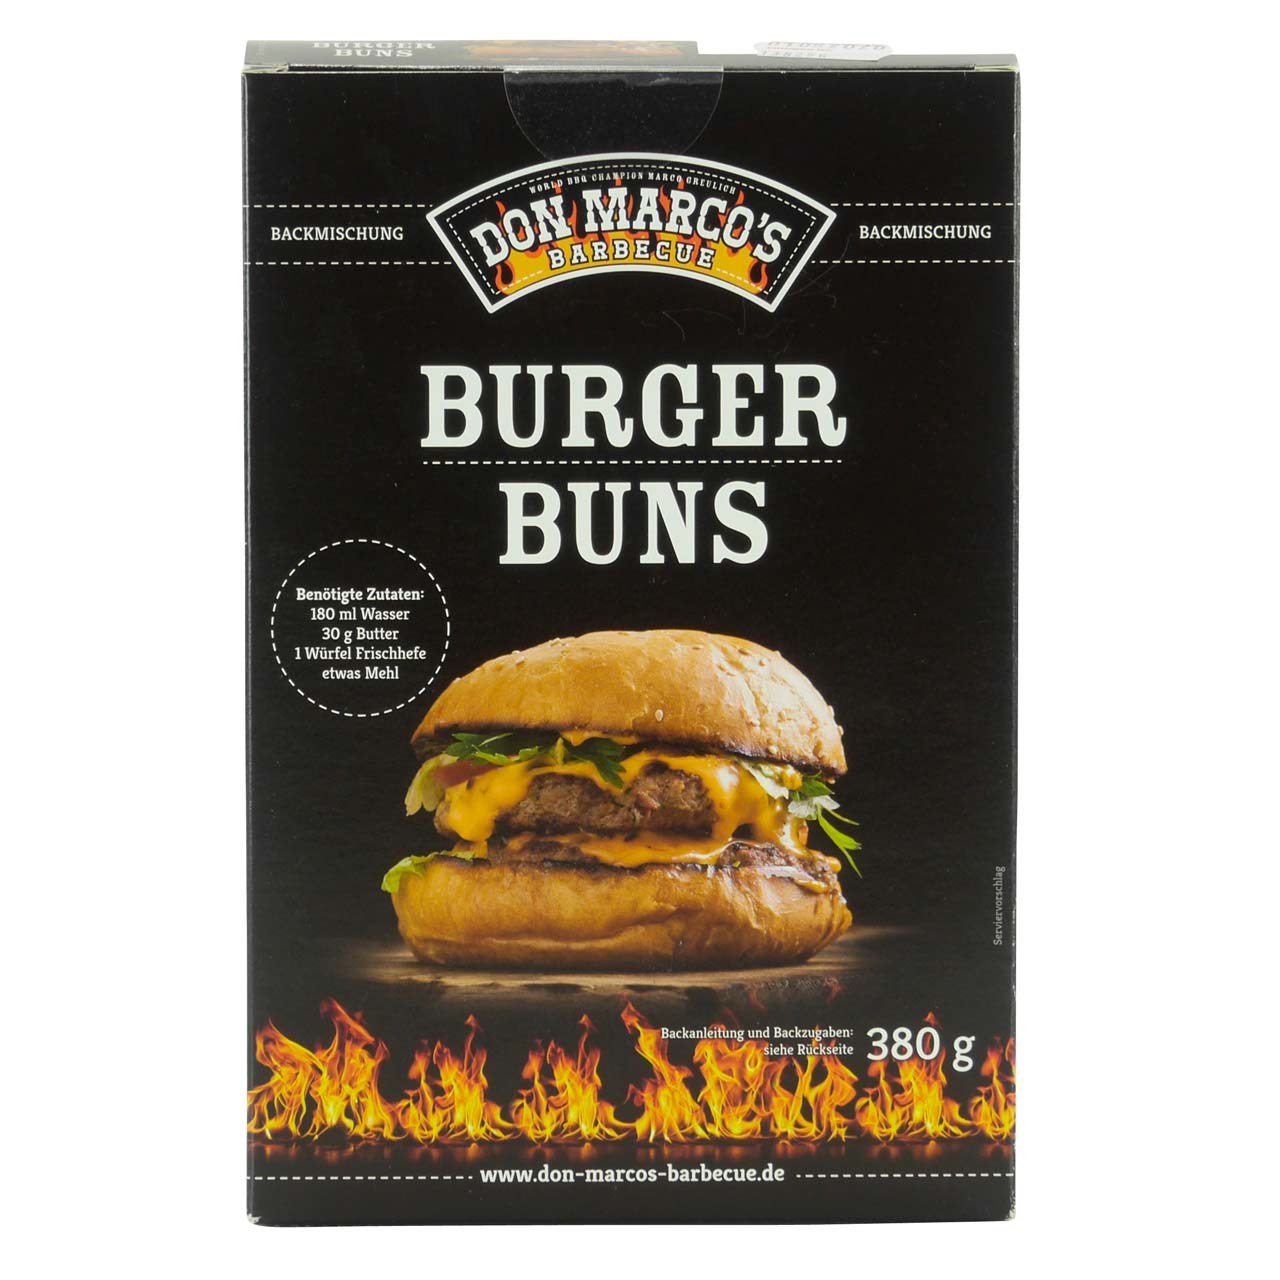 Don Marco's - Burger Buns - Backmischung für Burger Brötchen